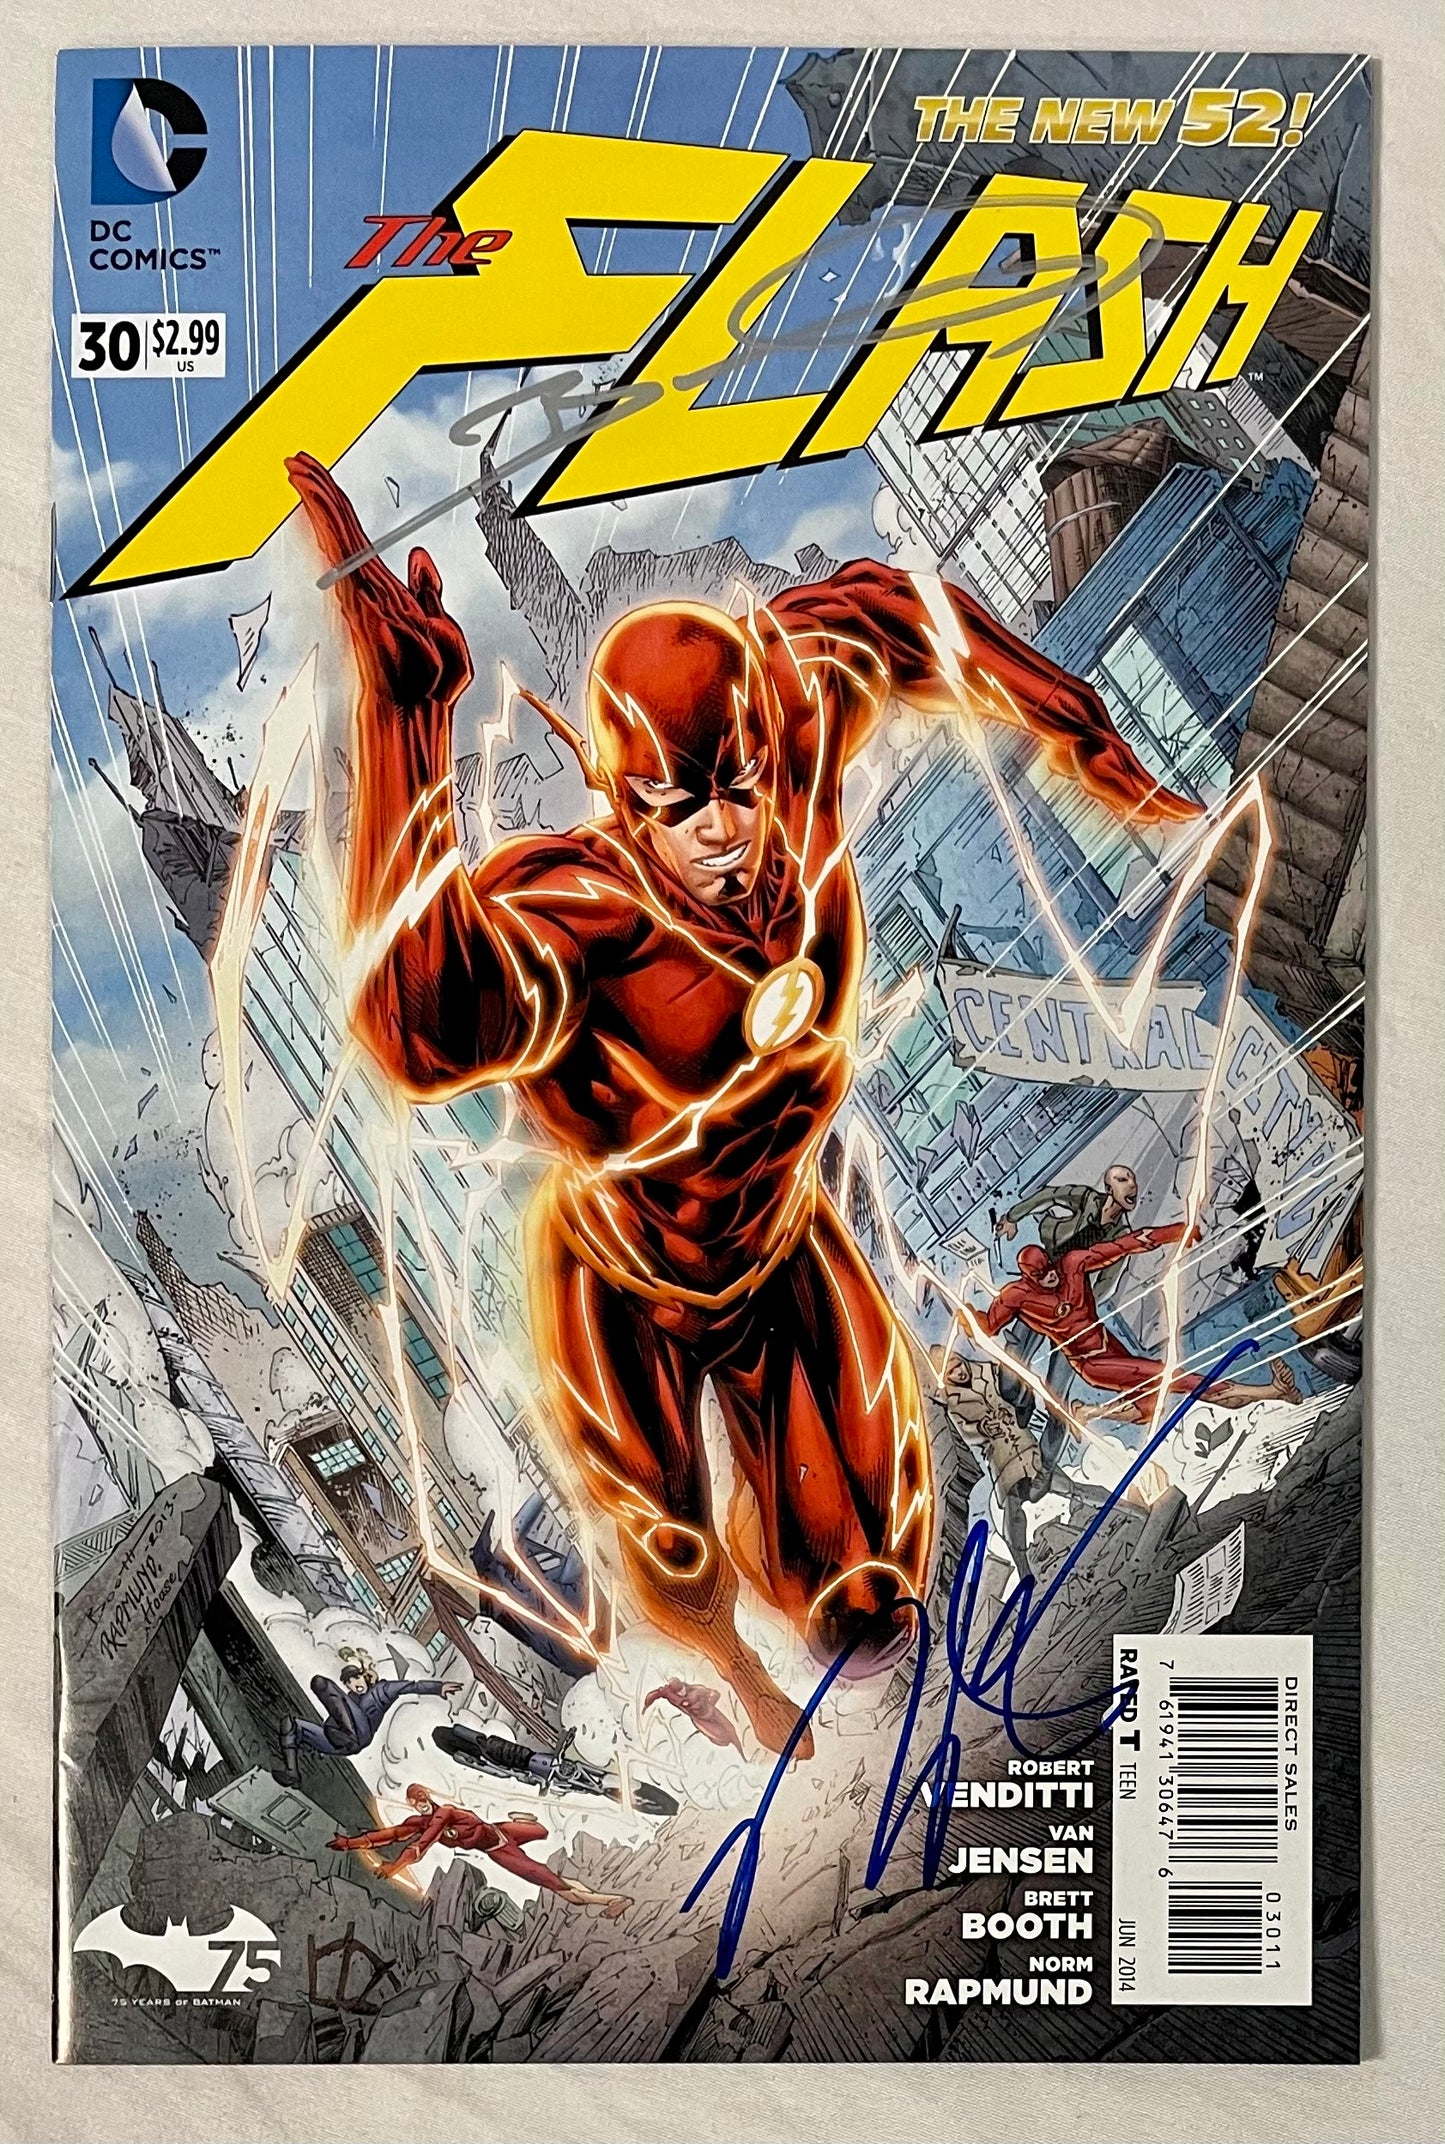 DC Comics The New 52! The Flash #30